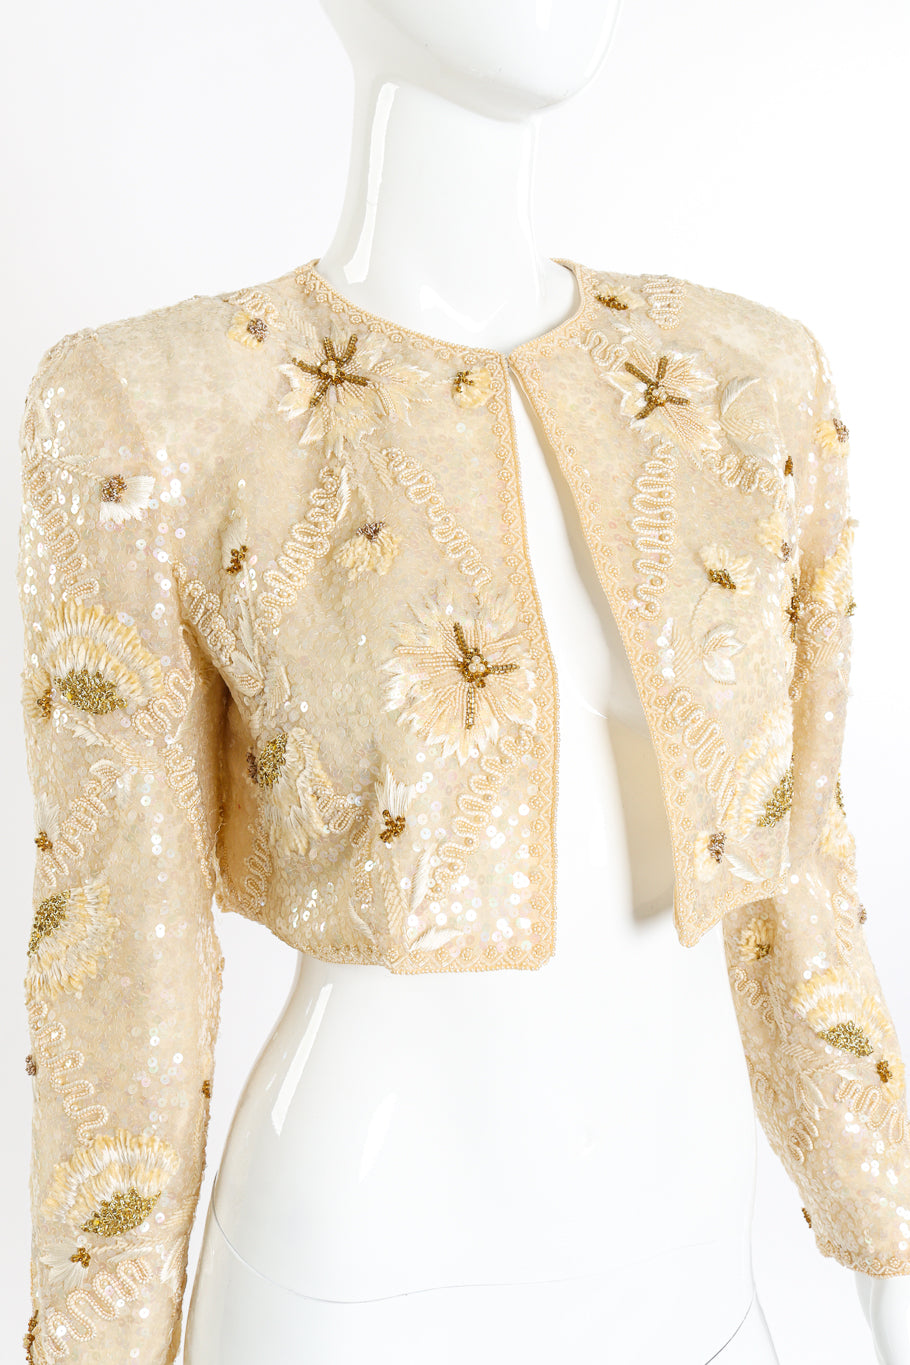 Vintage Richilene Beaded Bolero Jacket front on mannequin closeup @recessla